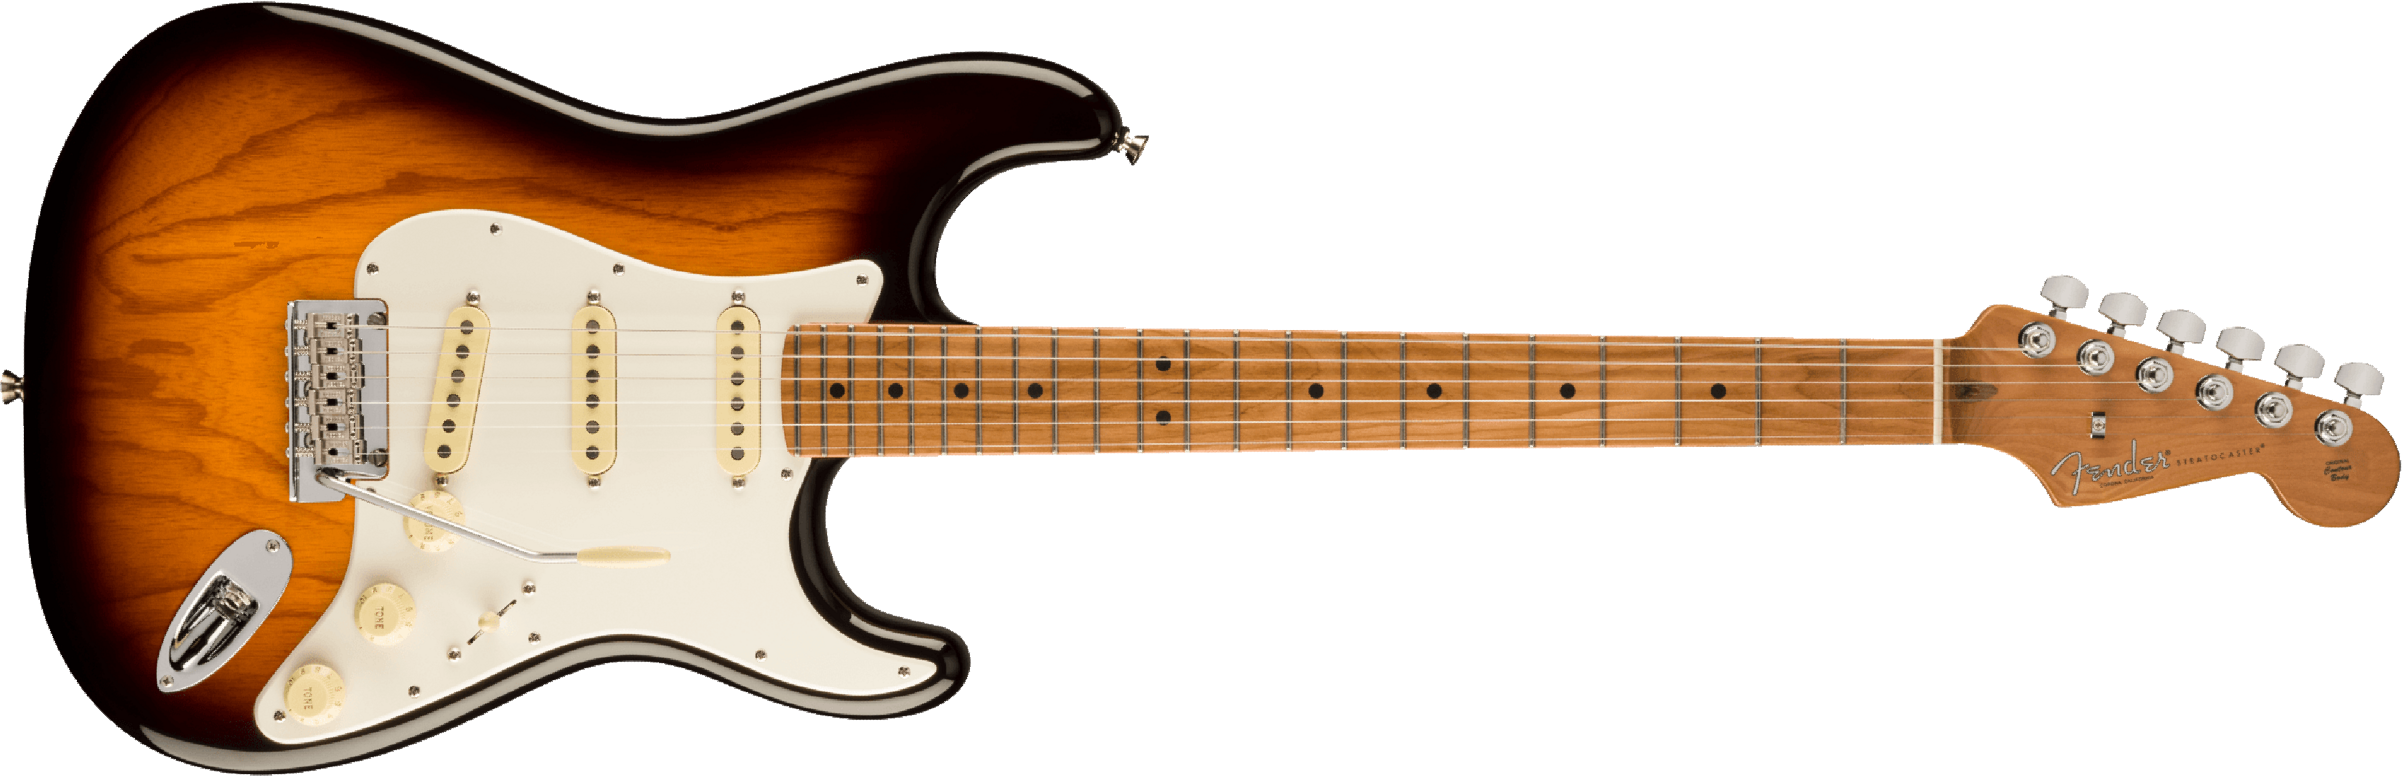 Fender Strat American Pro Ii Ltd 3s Custom Shop Trem Mn - 2-color Sunburst - Str shape electric guitar - Main picture